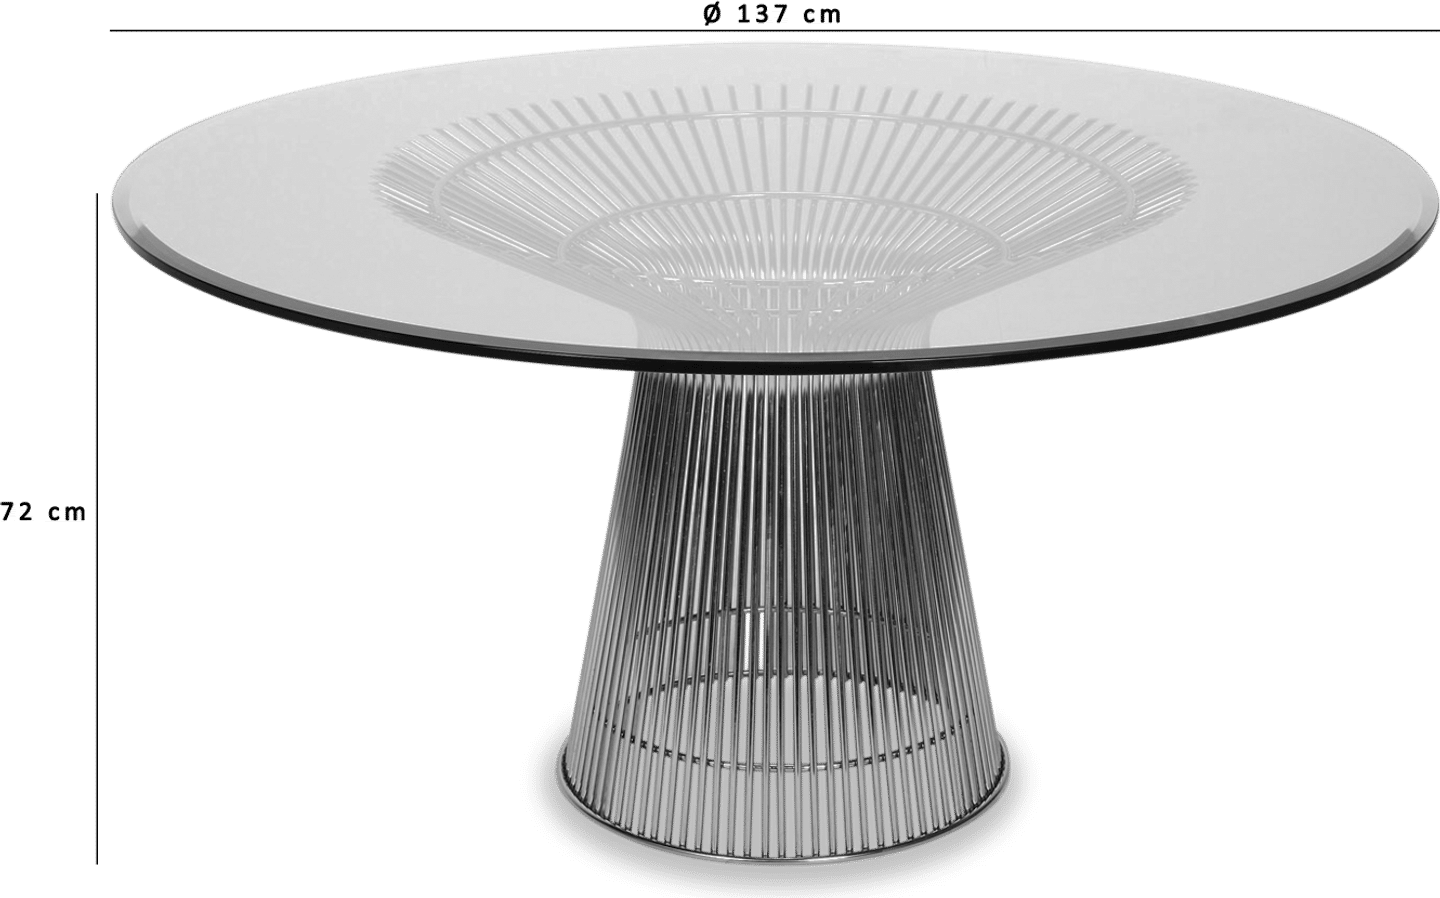 Mesa de comedor inspirada en Platner Silver image.